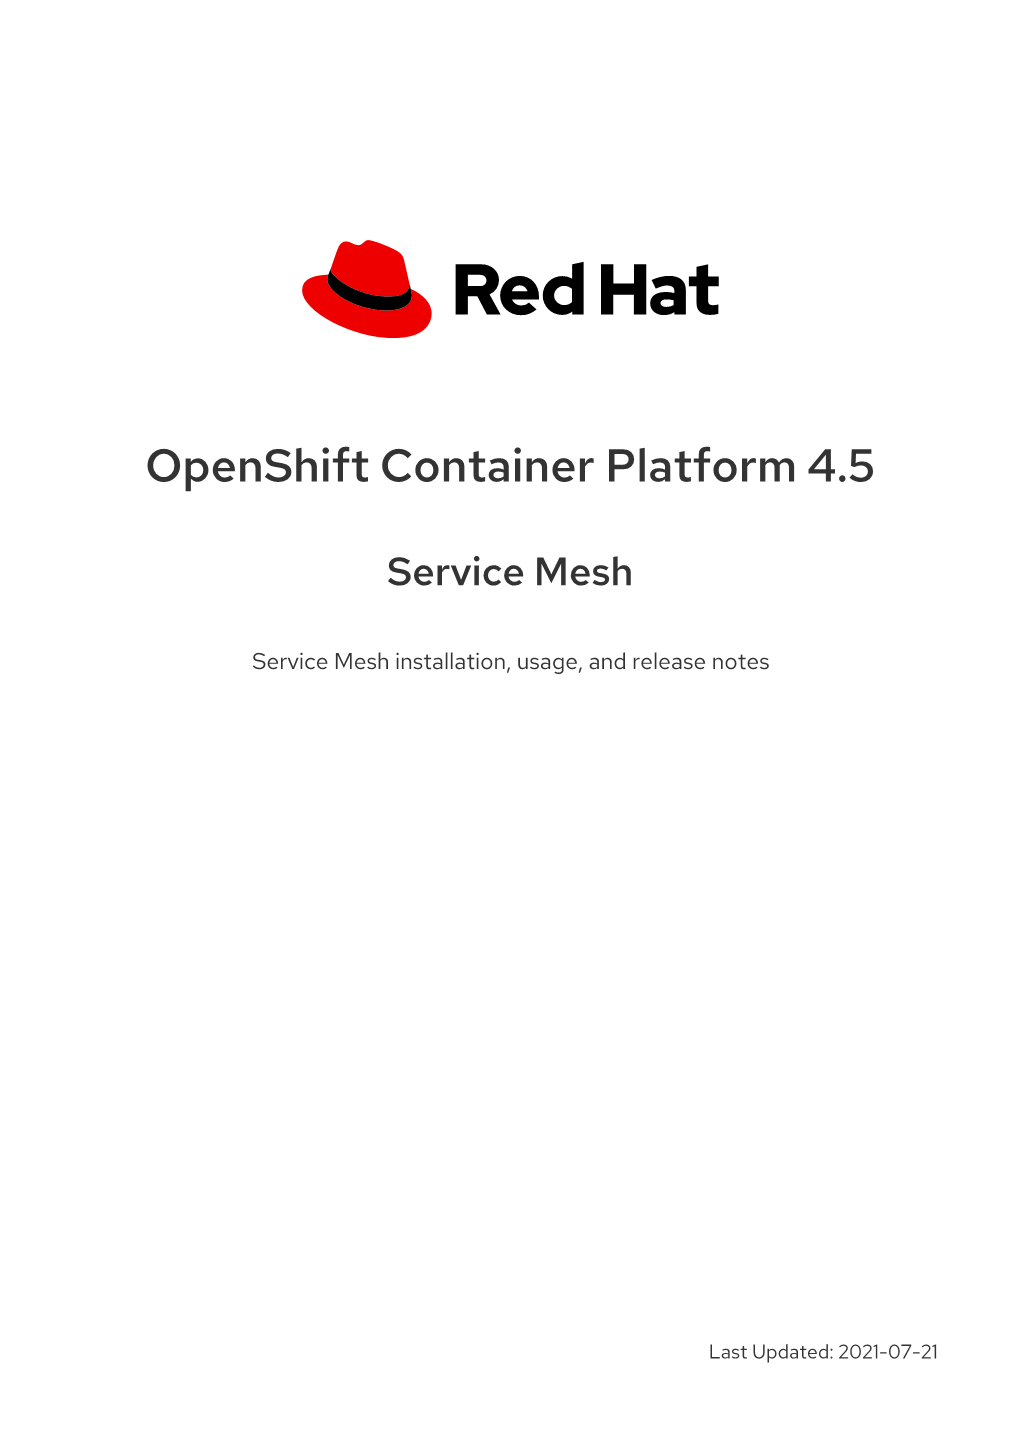 Openshift Container Platform 4.5 Service Mesh